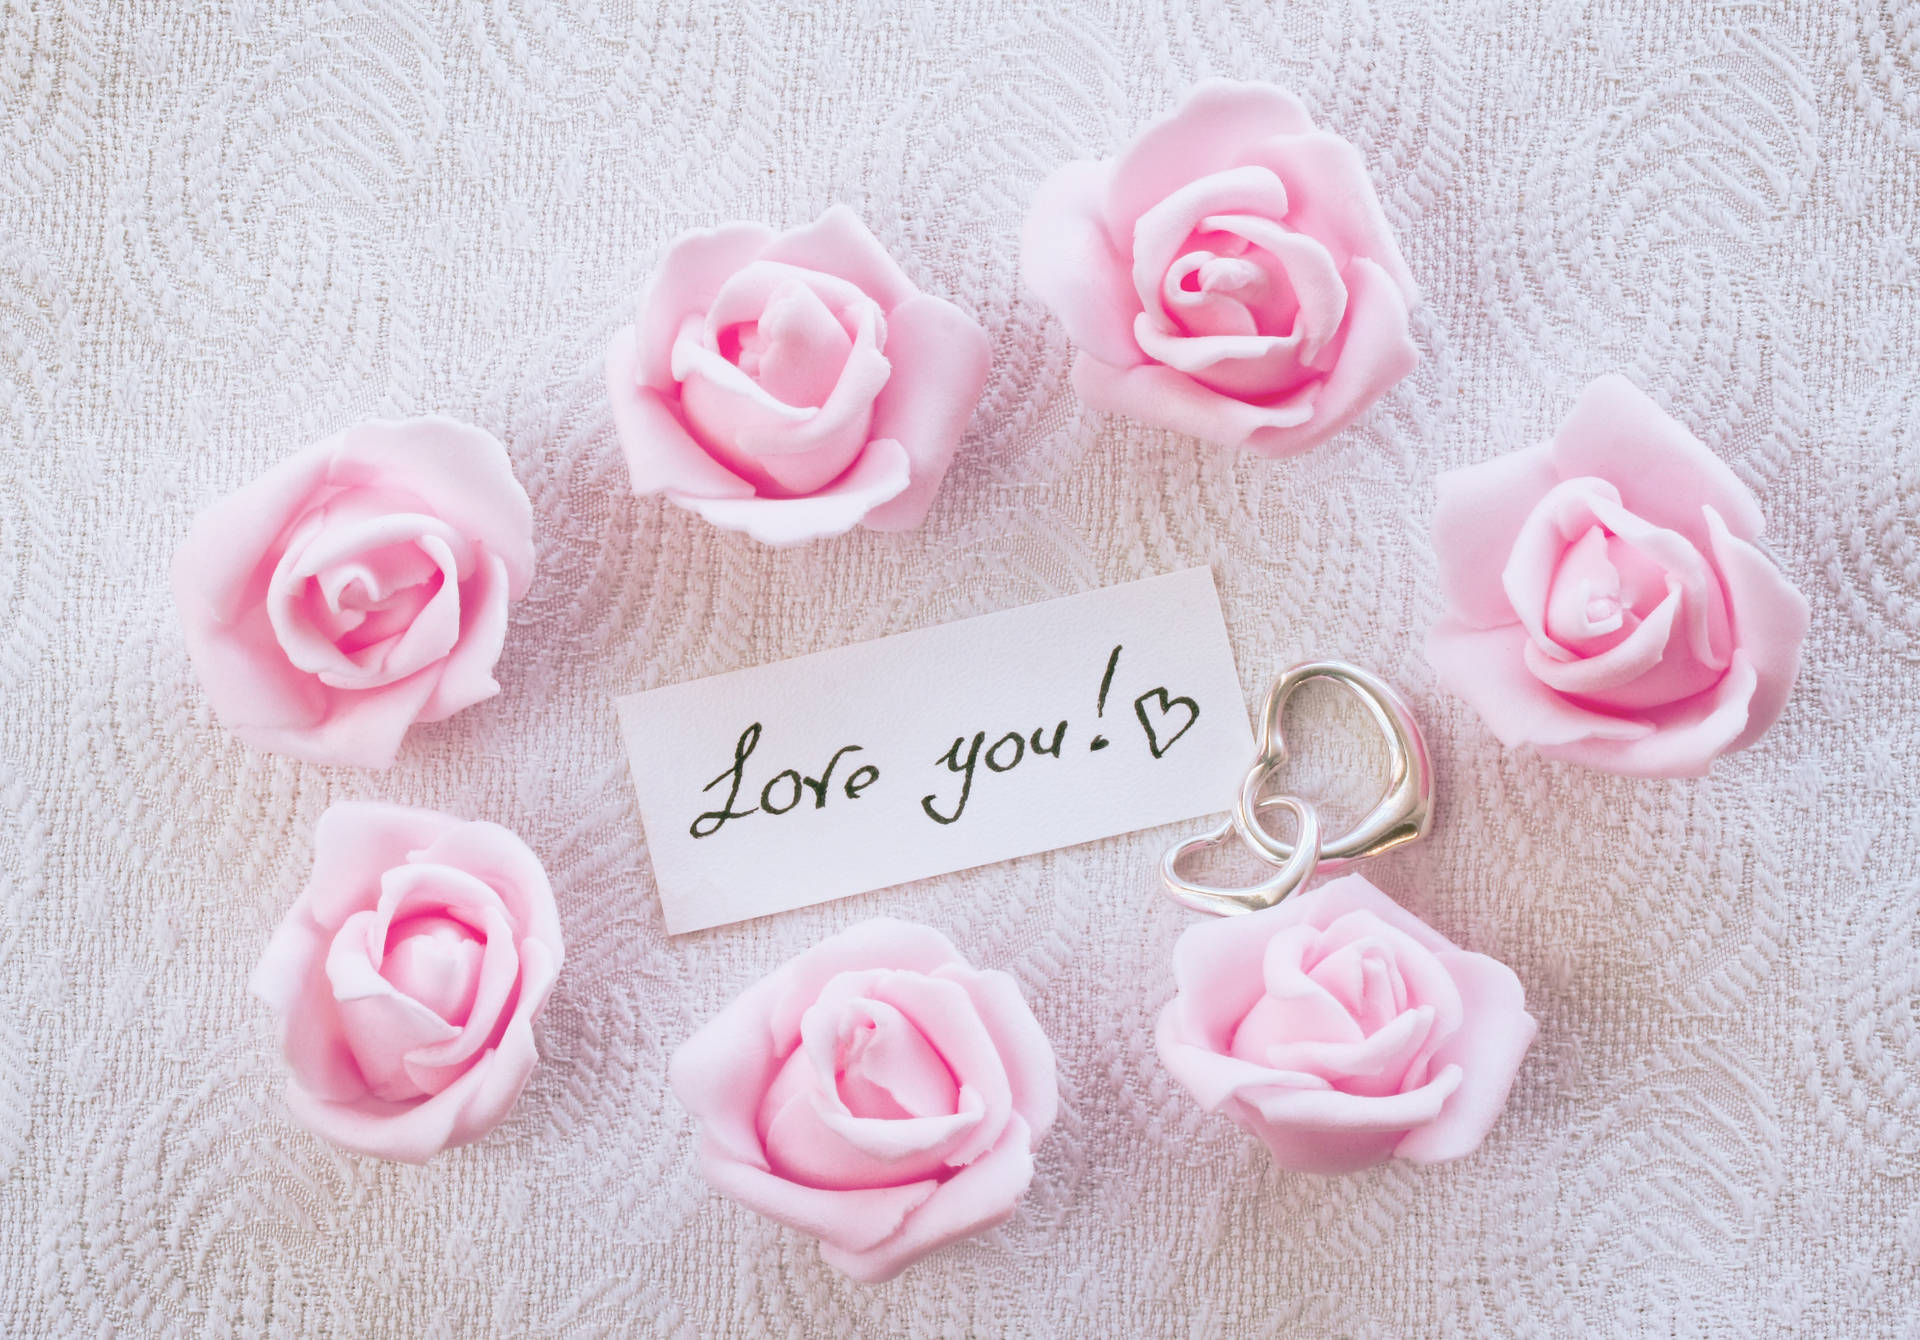 A Bloom of Love: Romantic Rose Wallpaper